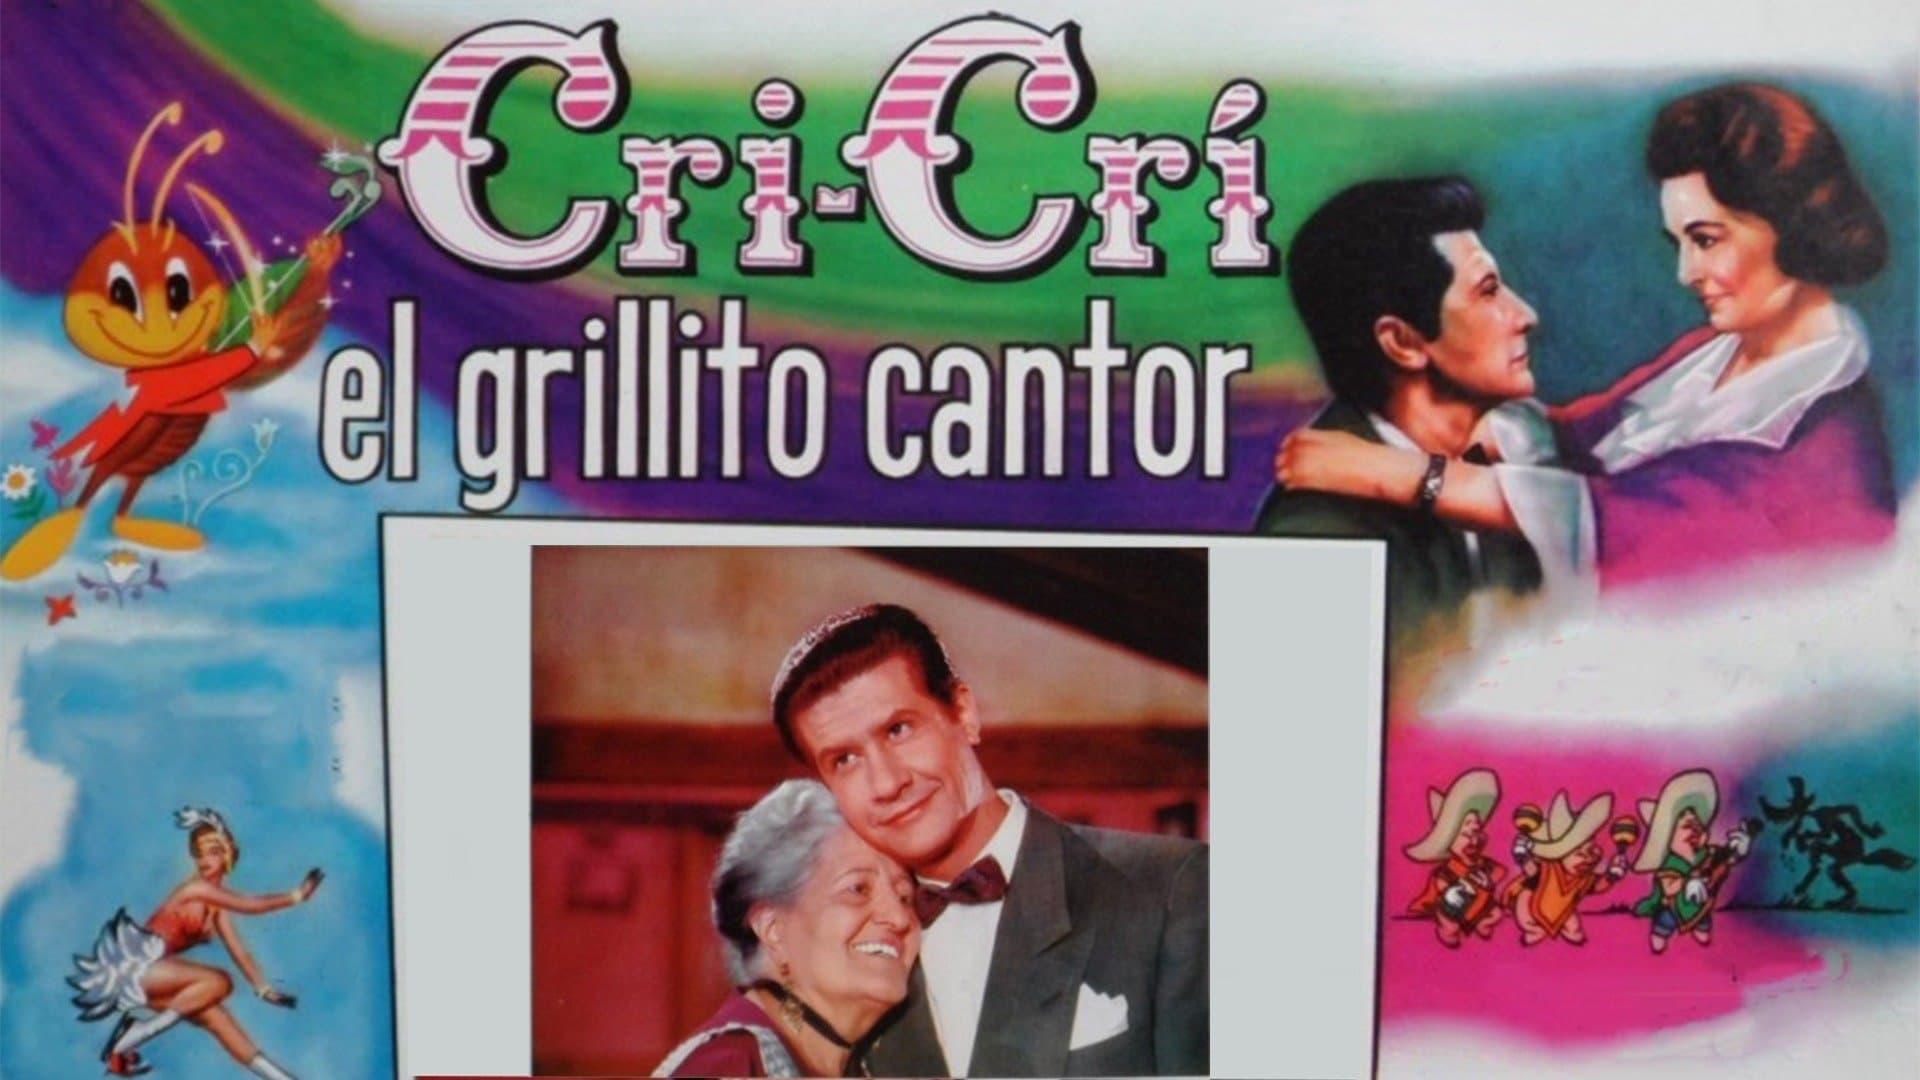 Cri Cri el Grillito Cantor backdrop